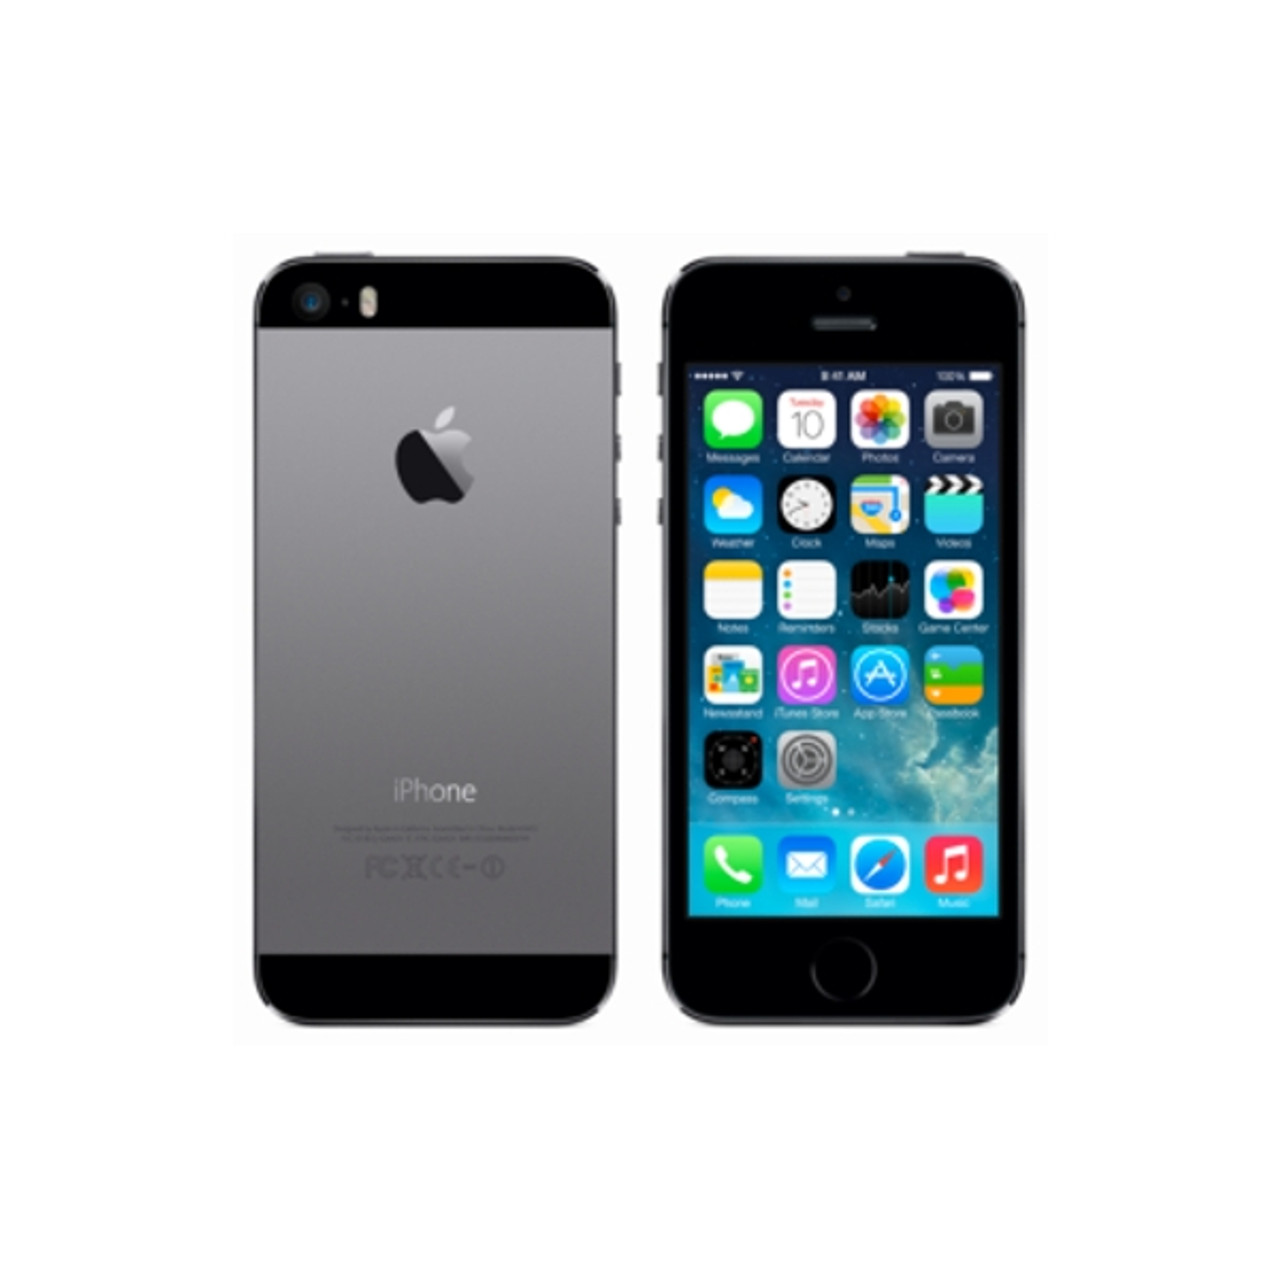 iPhone 5s Space Gray ymobile 32GB